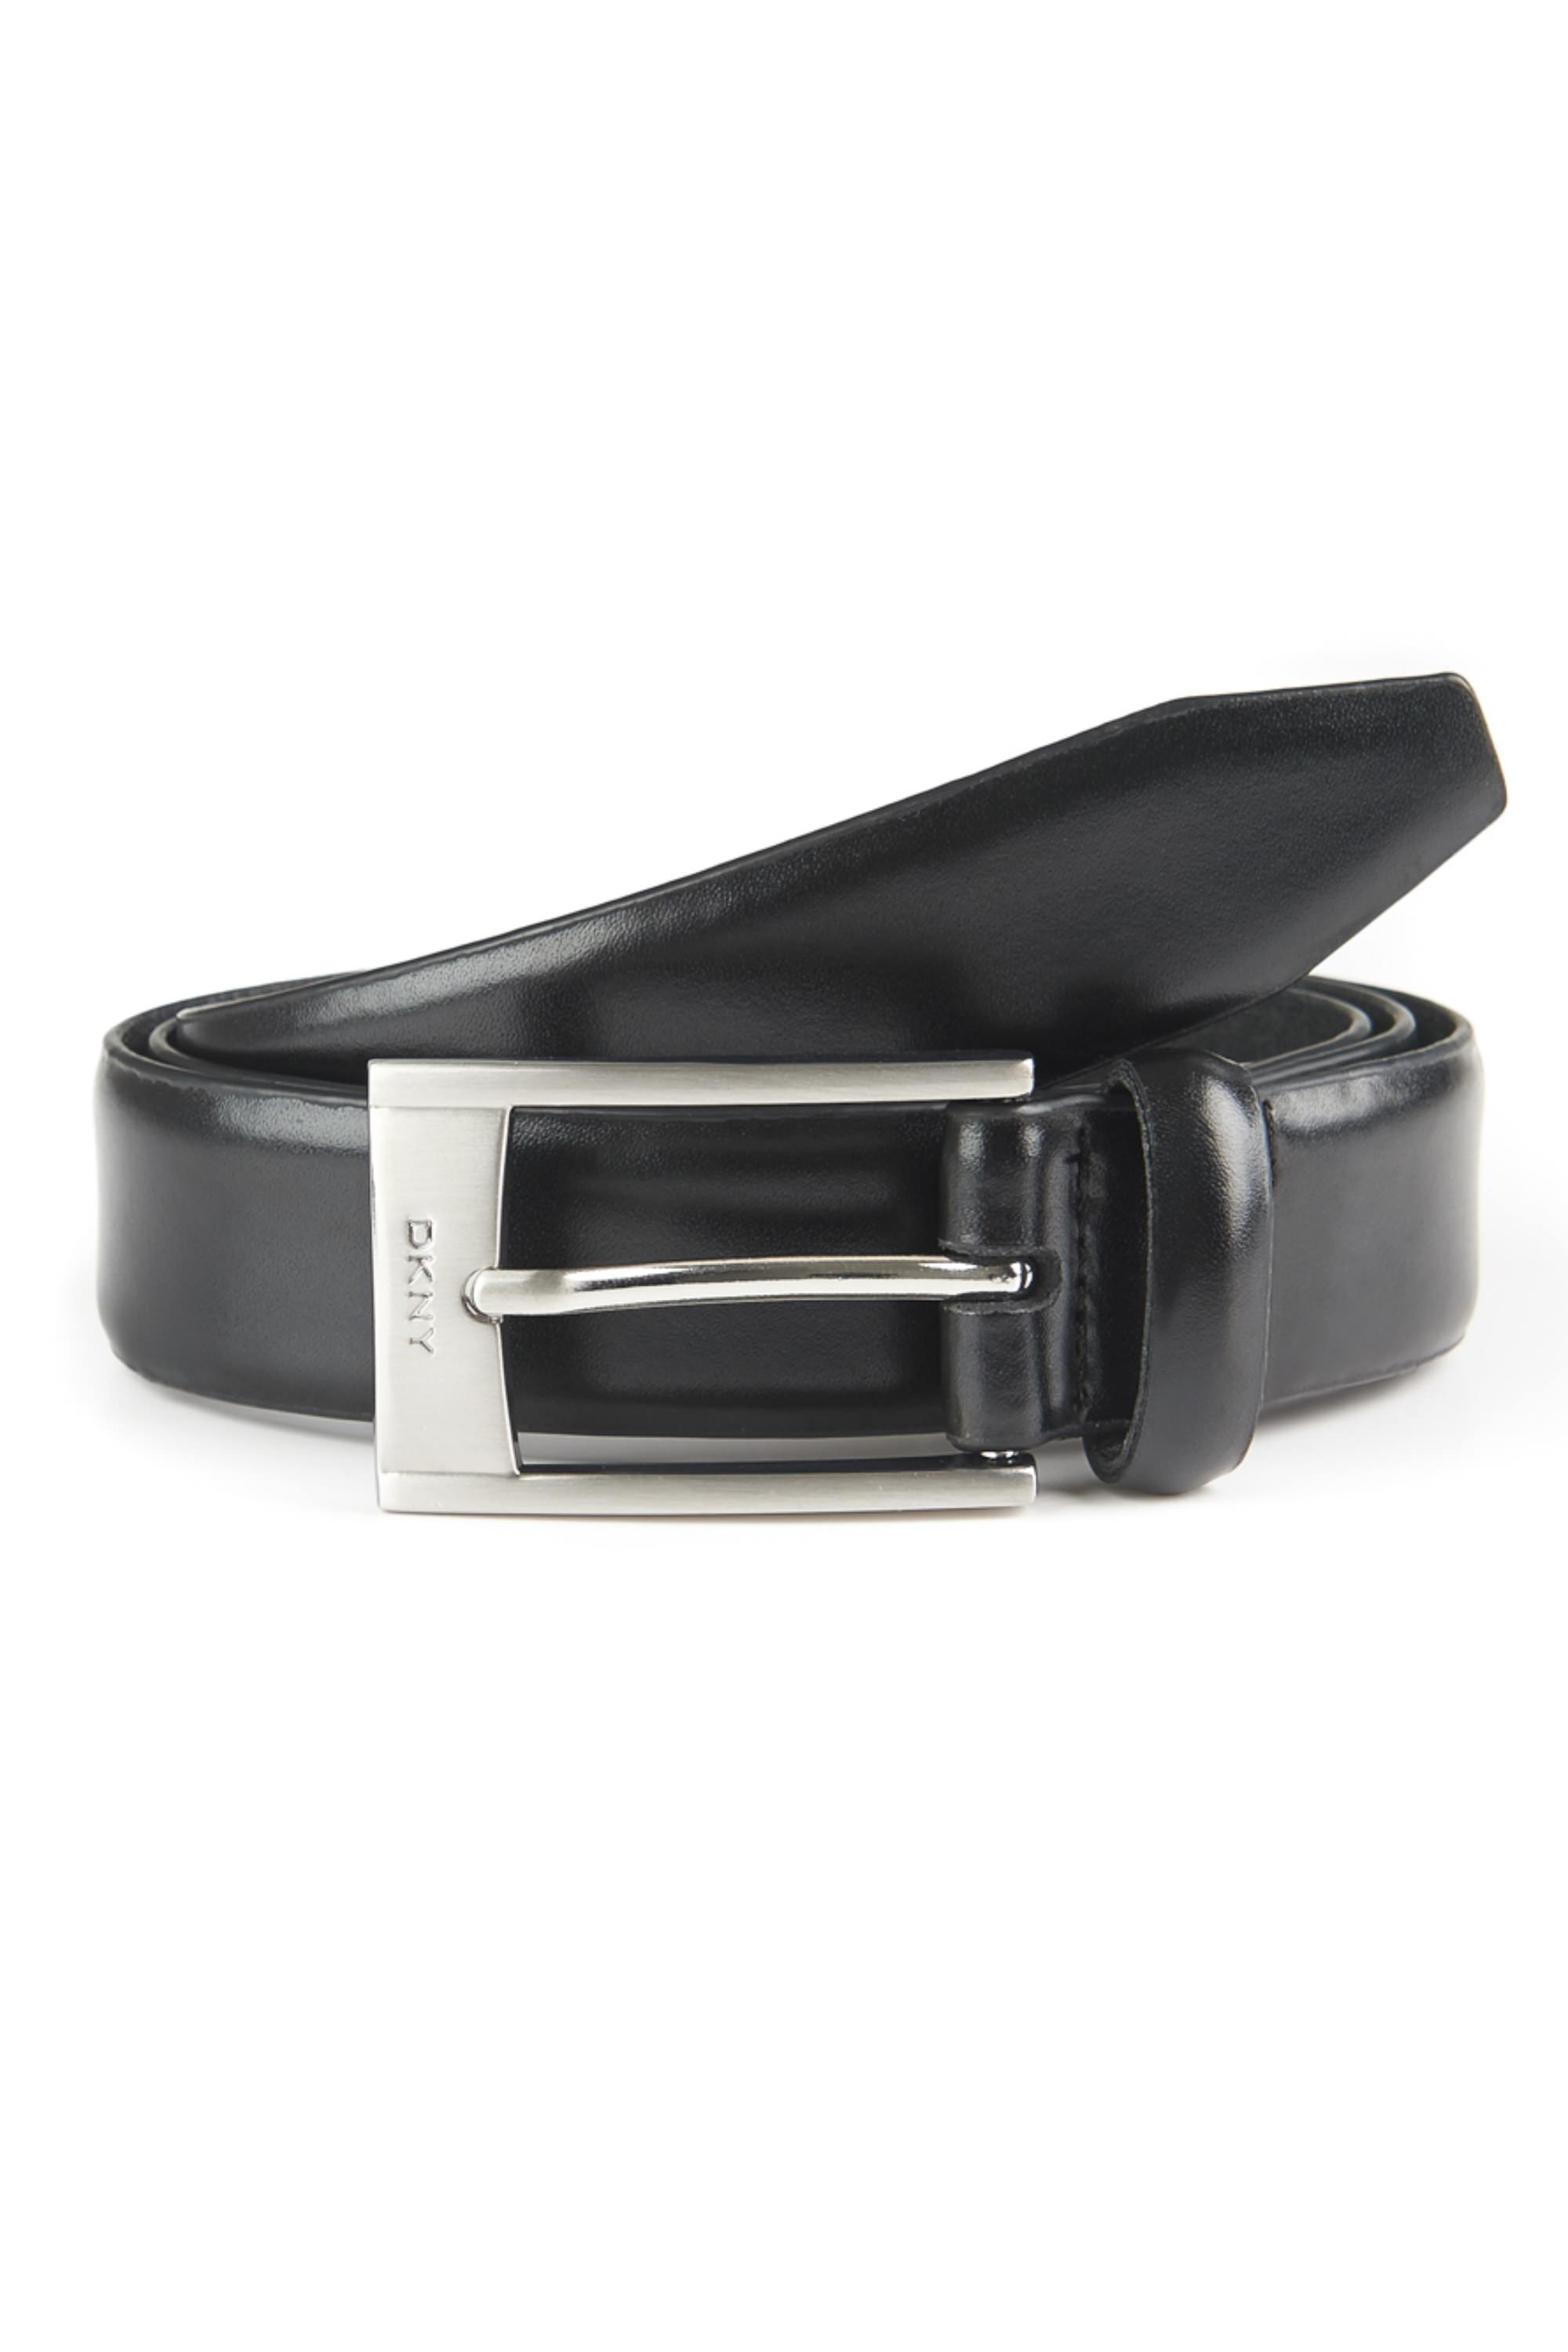 DKNY Black Full Grain Leather Logo Buckle Belt | Buy Online at Moss